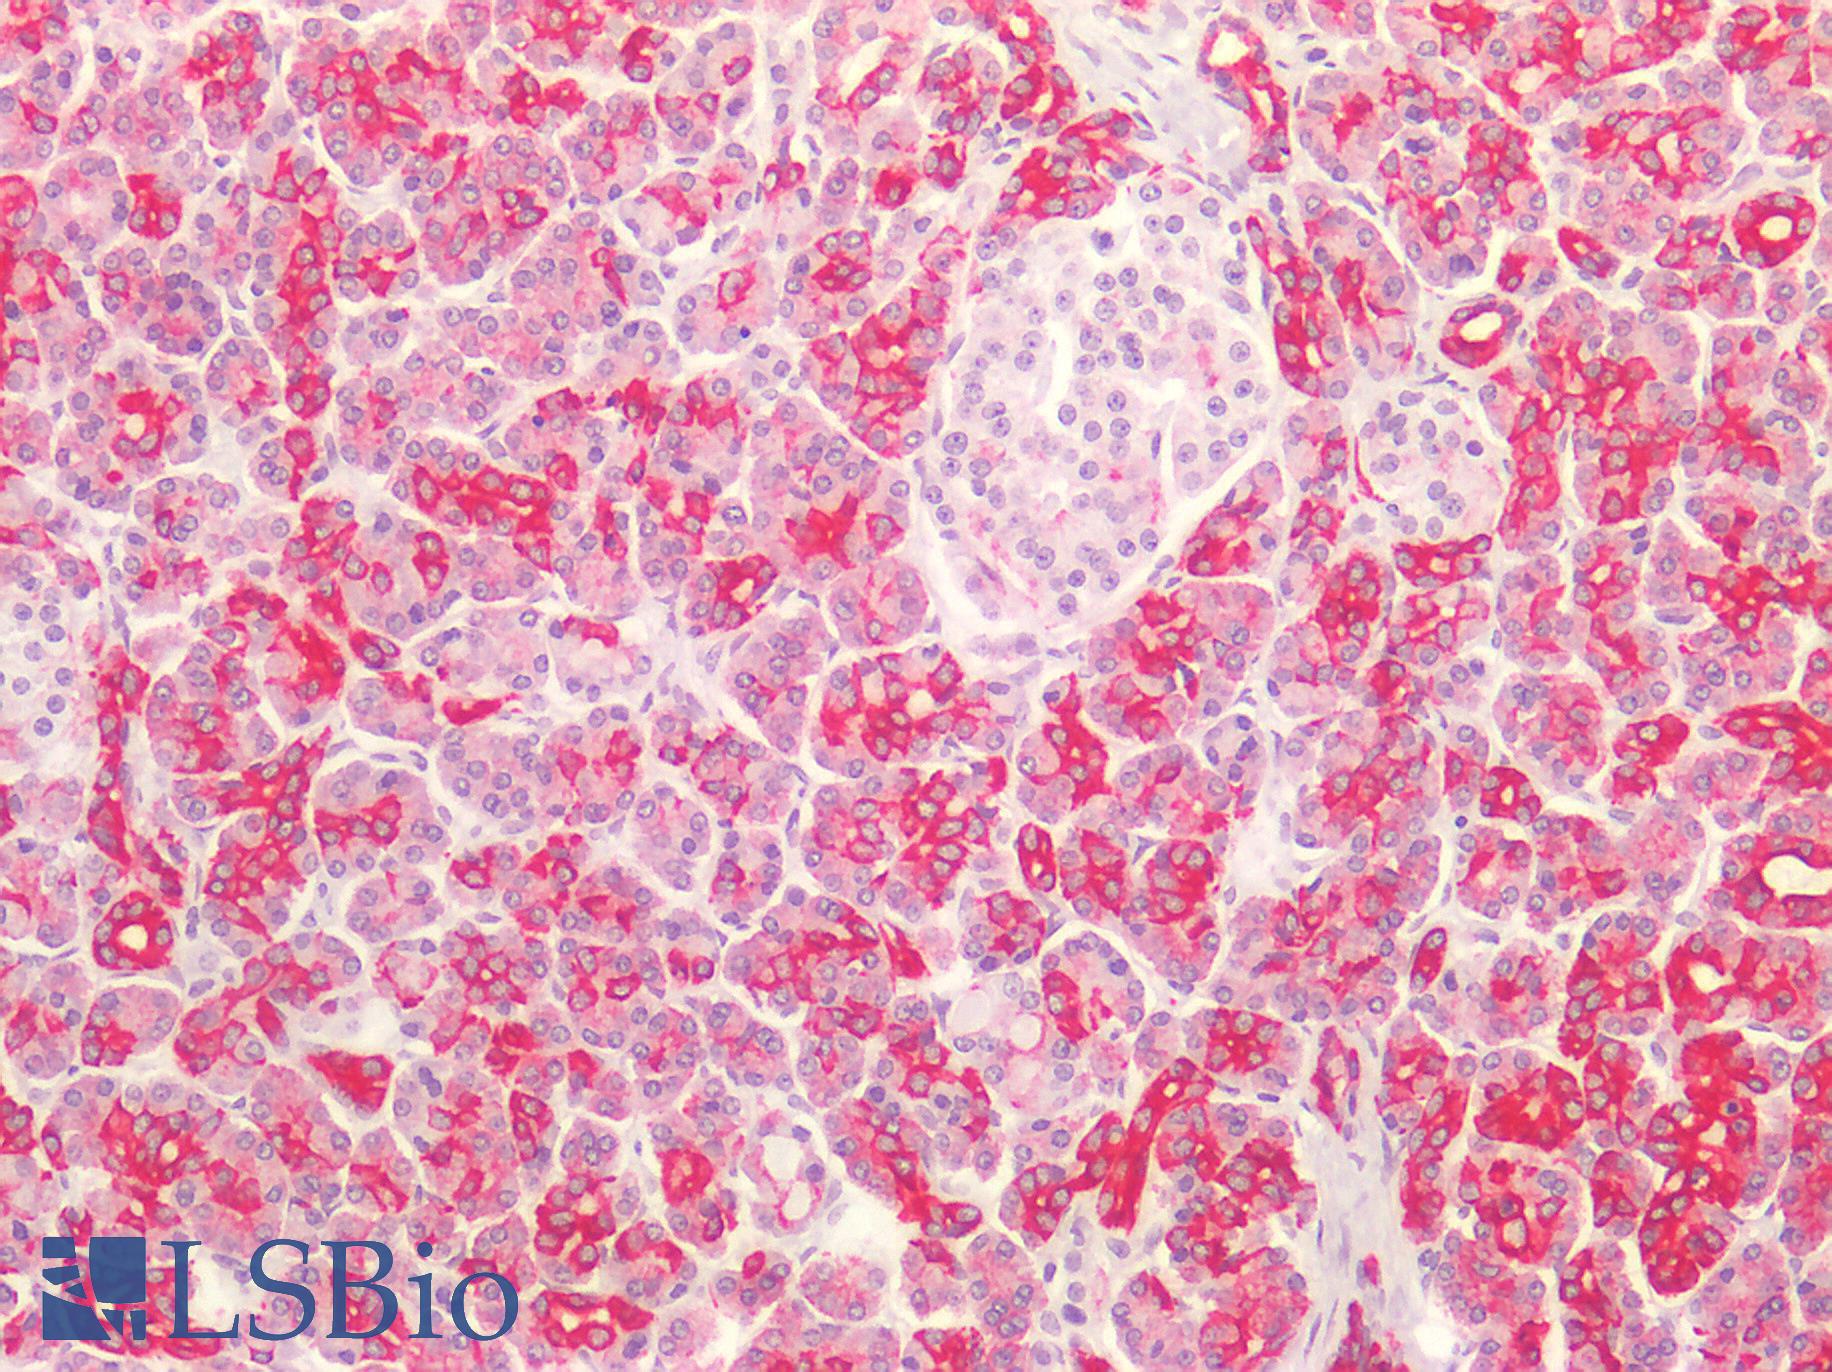 Basic Cytokeratin AE3 Antibody - Human Pancreas: Formalin-Fixed, Paraffin-Embedded (FFPE)